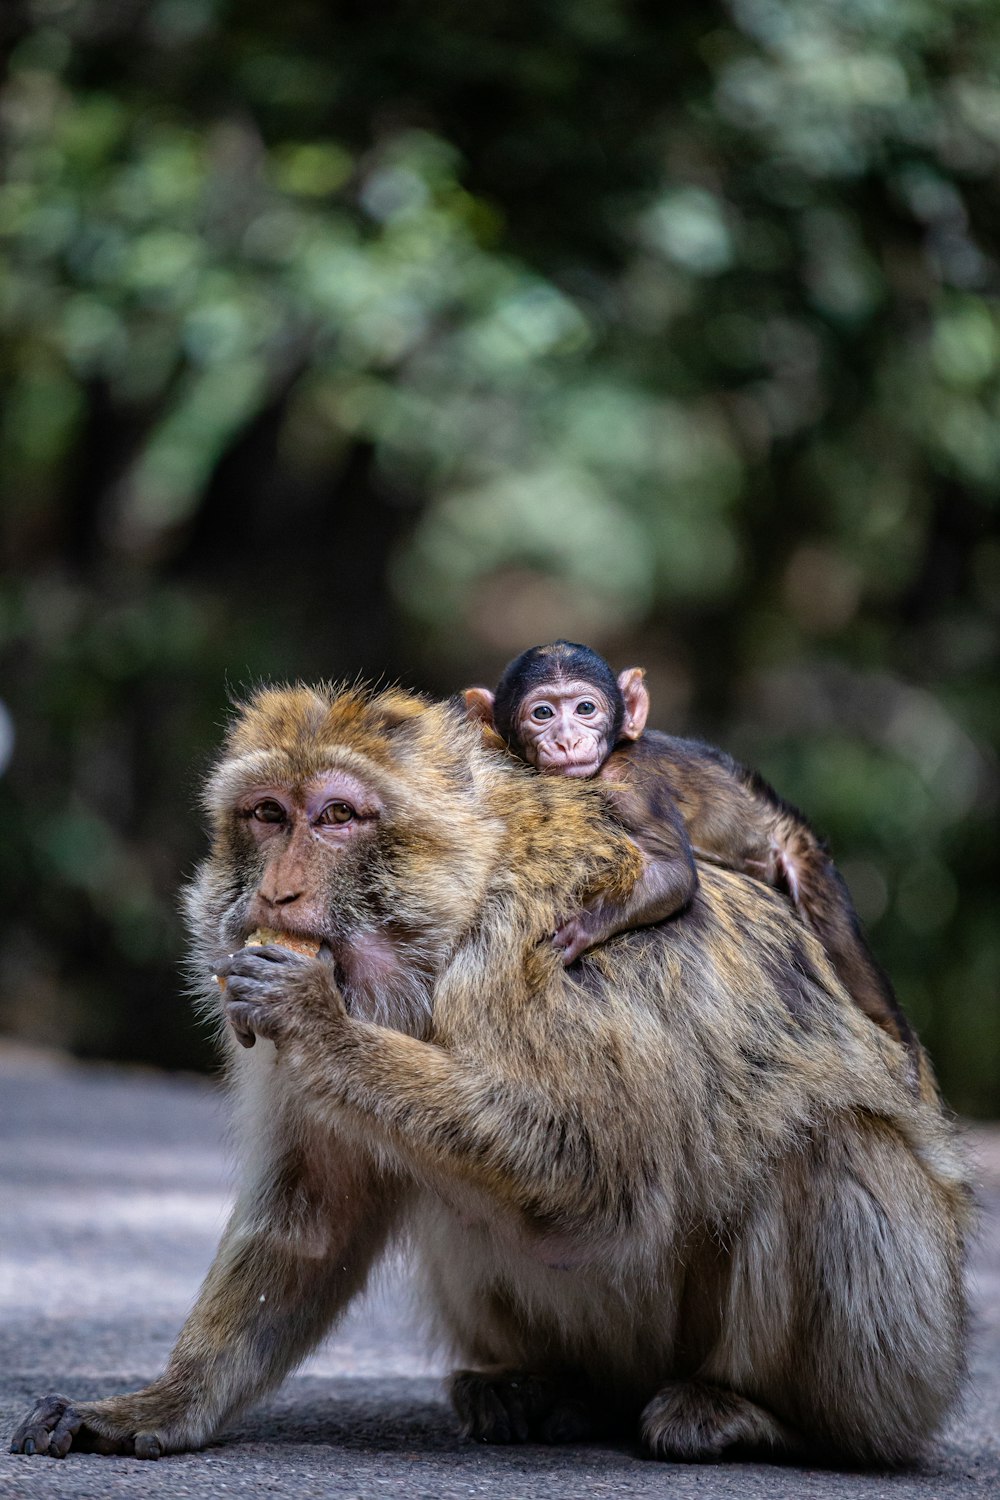 a monkey sitting on top of a monkey on its back